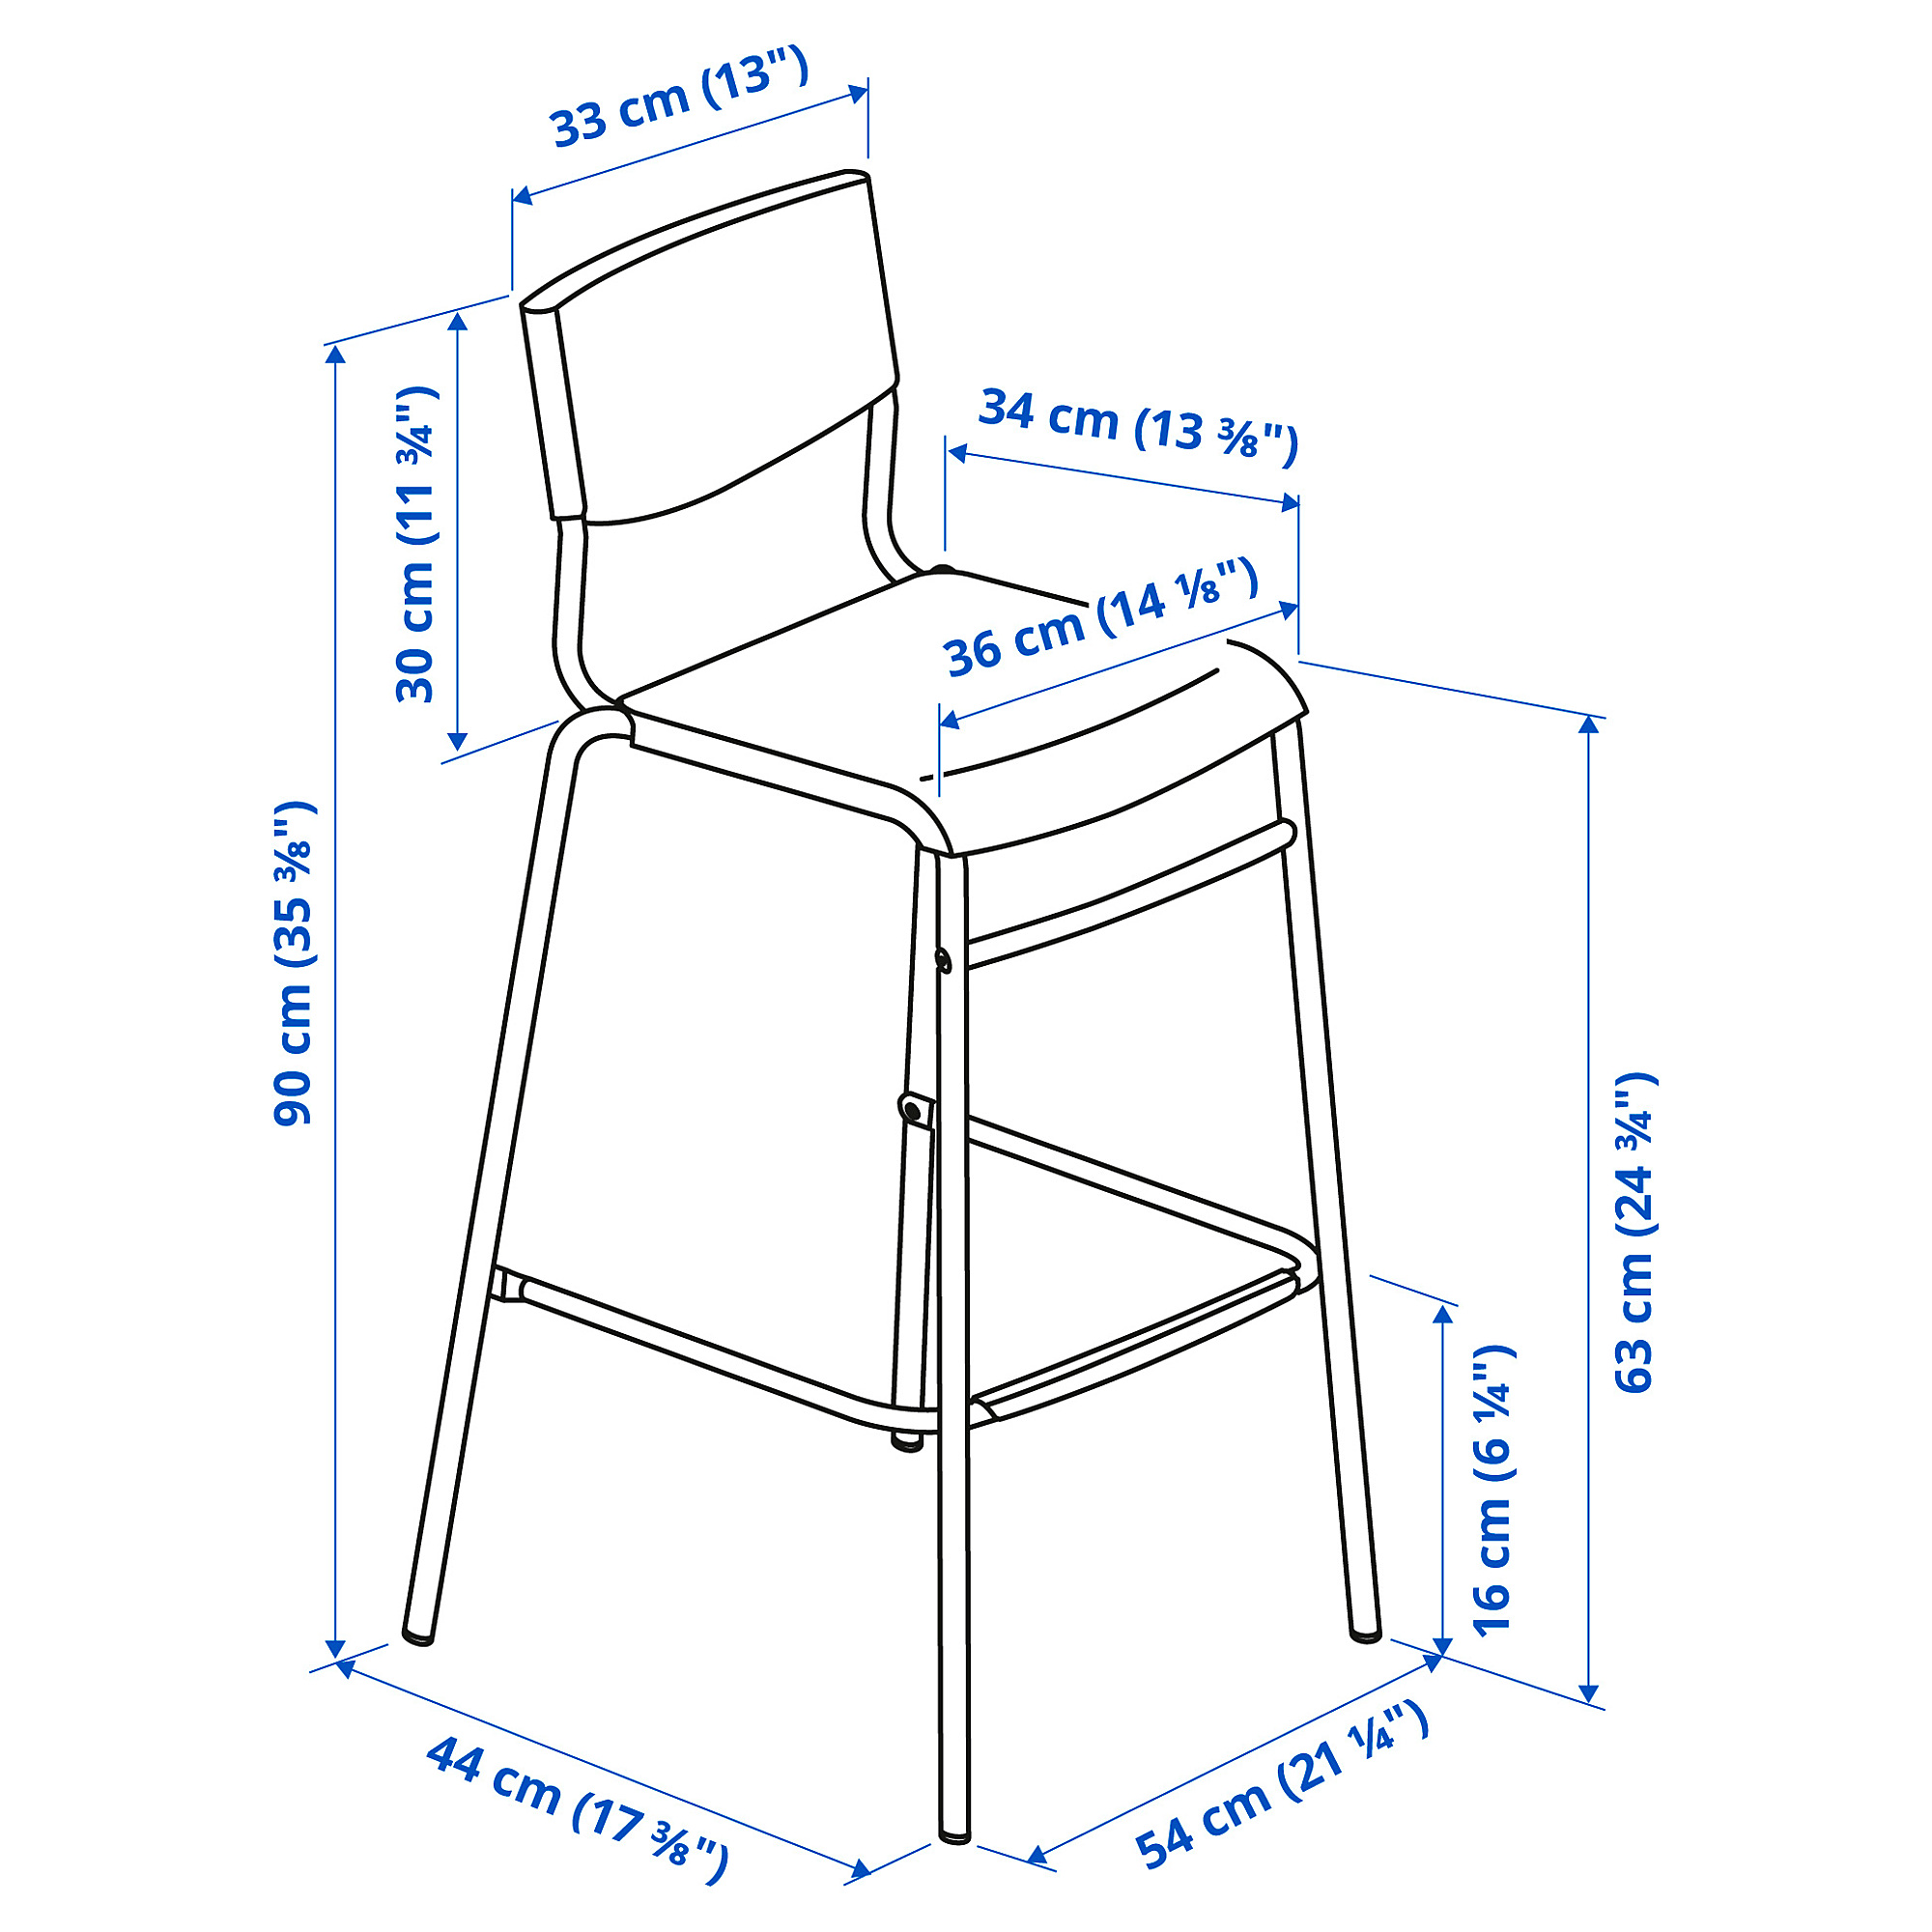 STIG bar stool with backrest